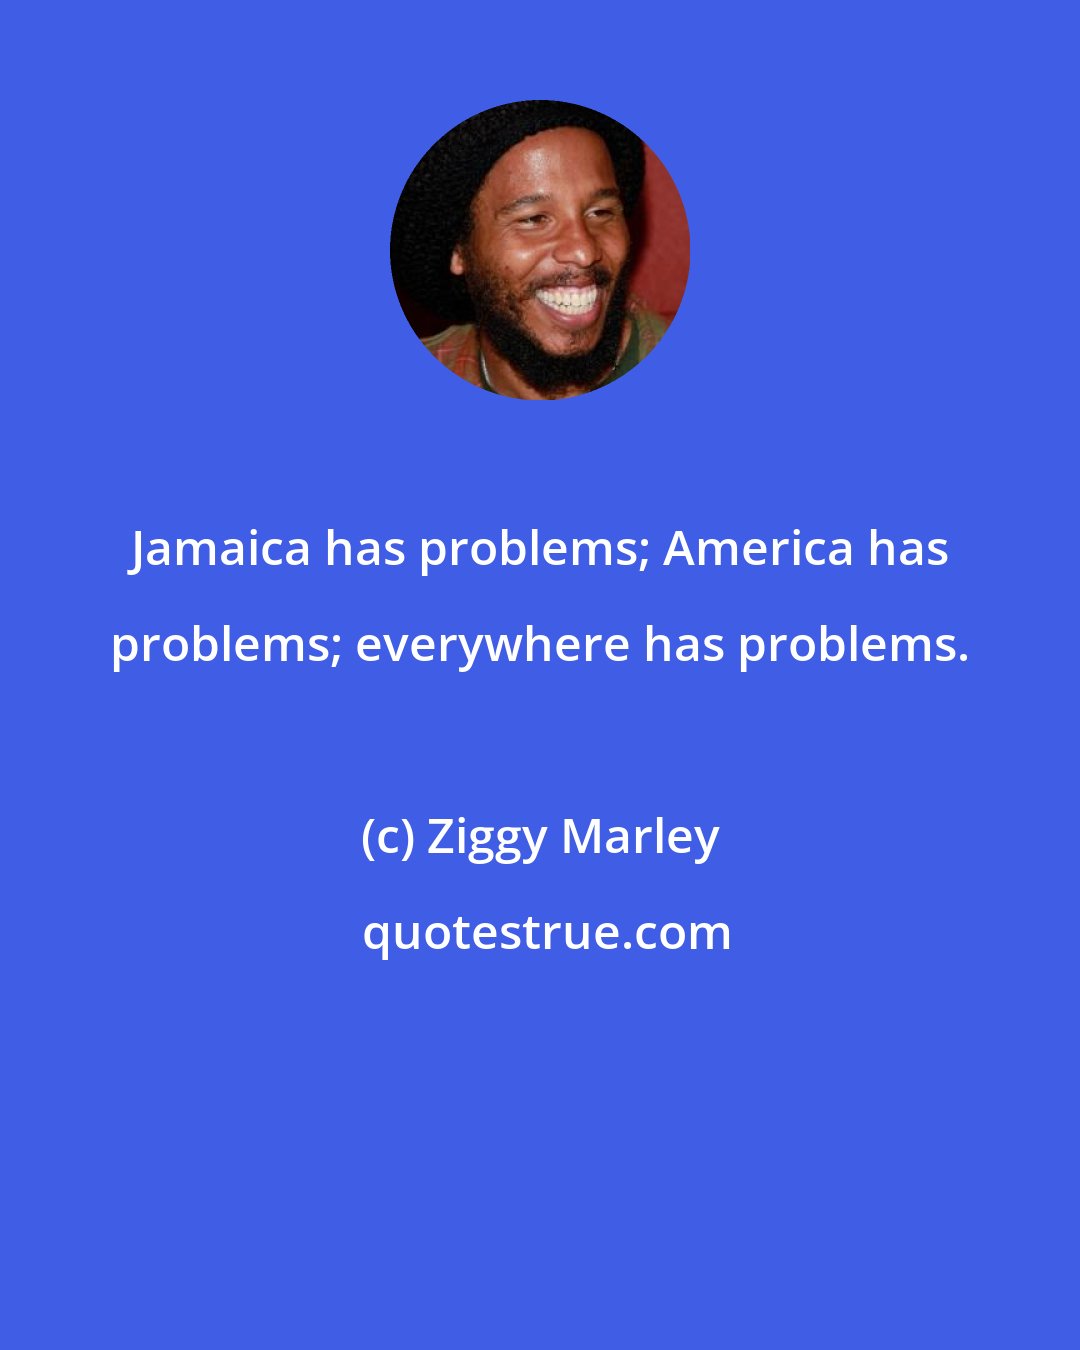 Ziggy Marley: Jamaica has problems; America has problems; everywhere has problems.